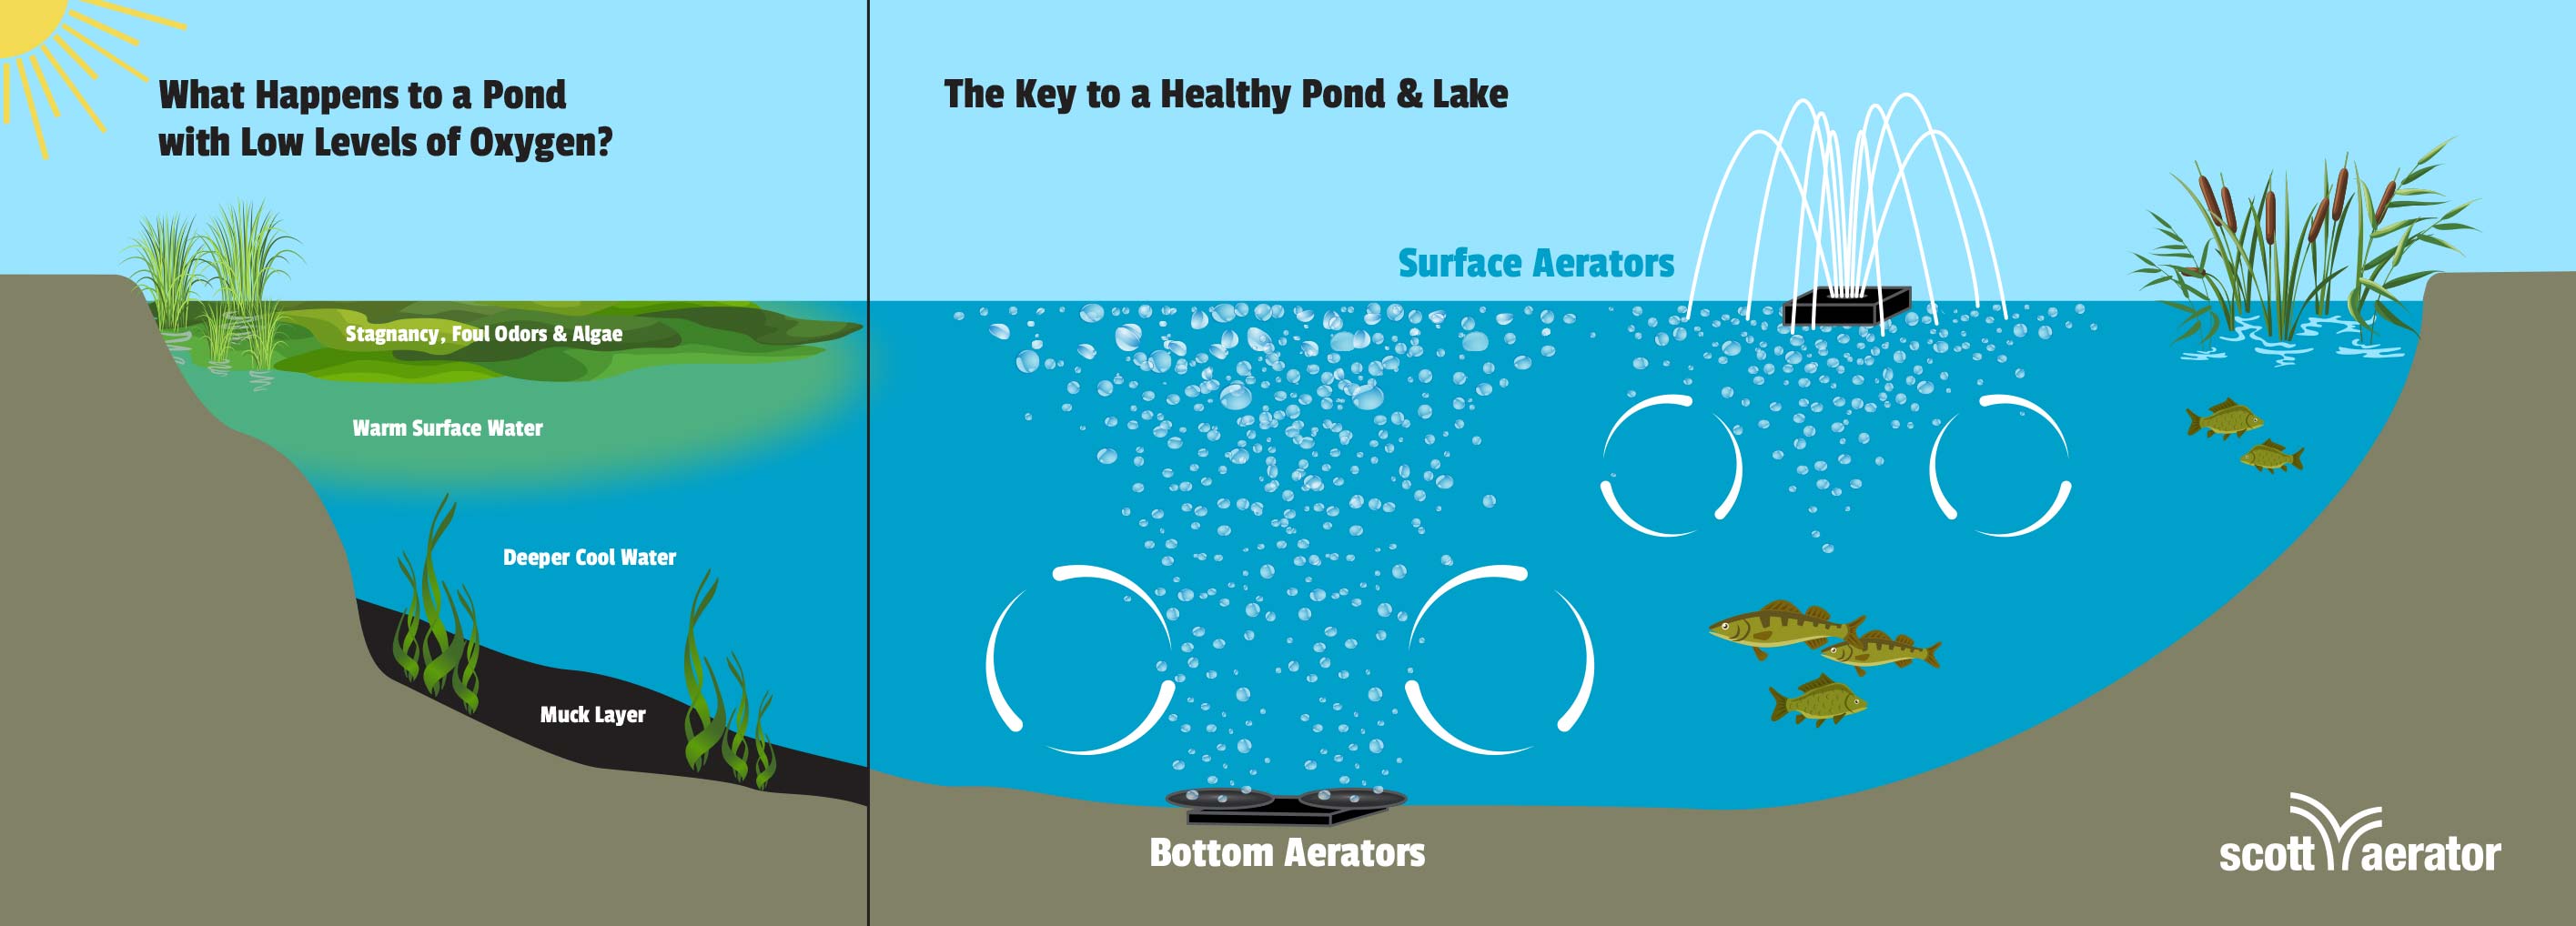 Pond Aeration Benefits